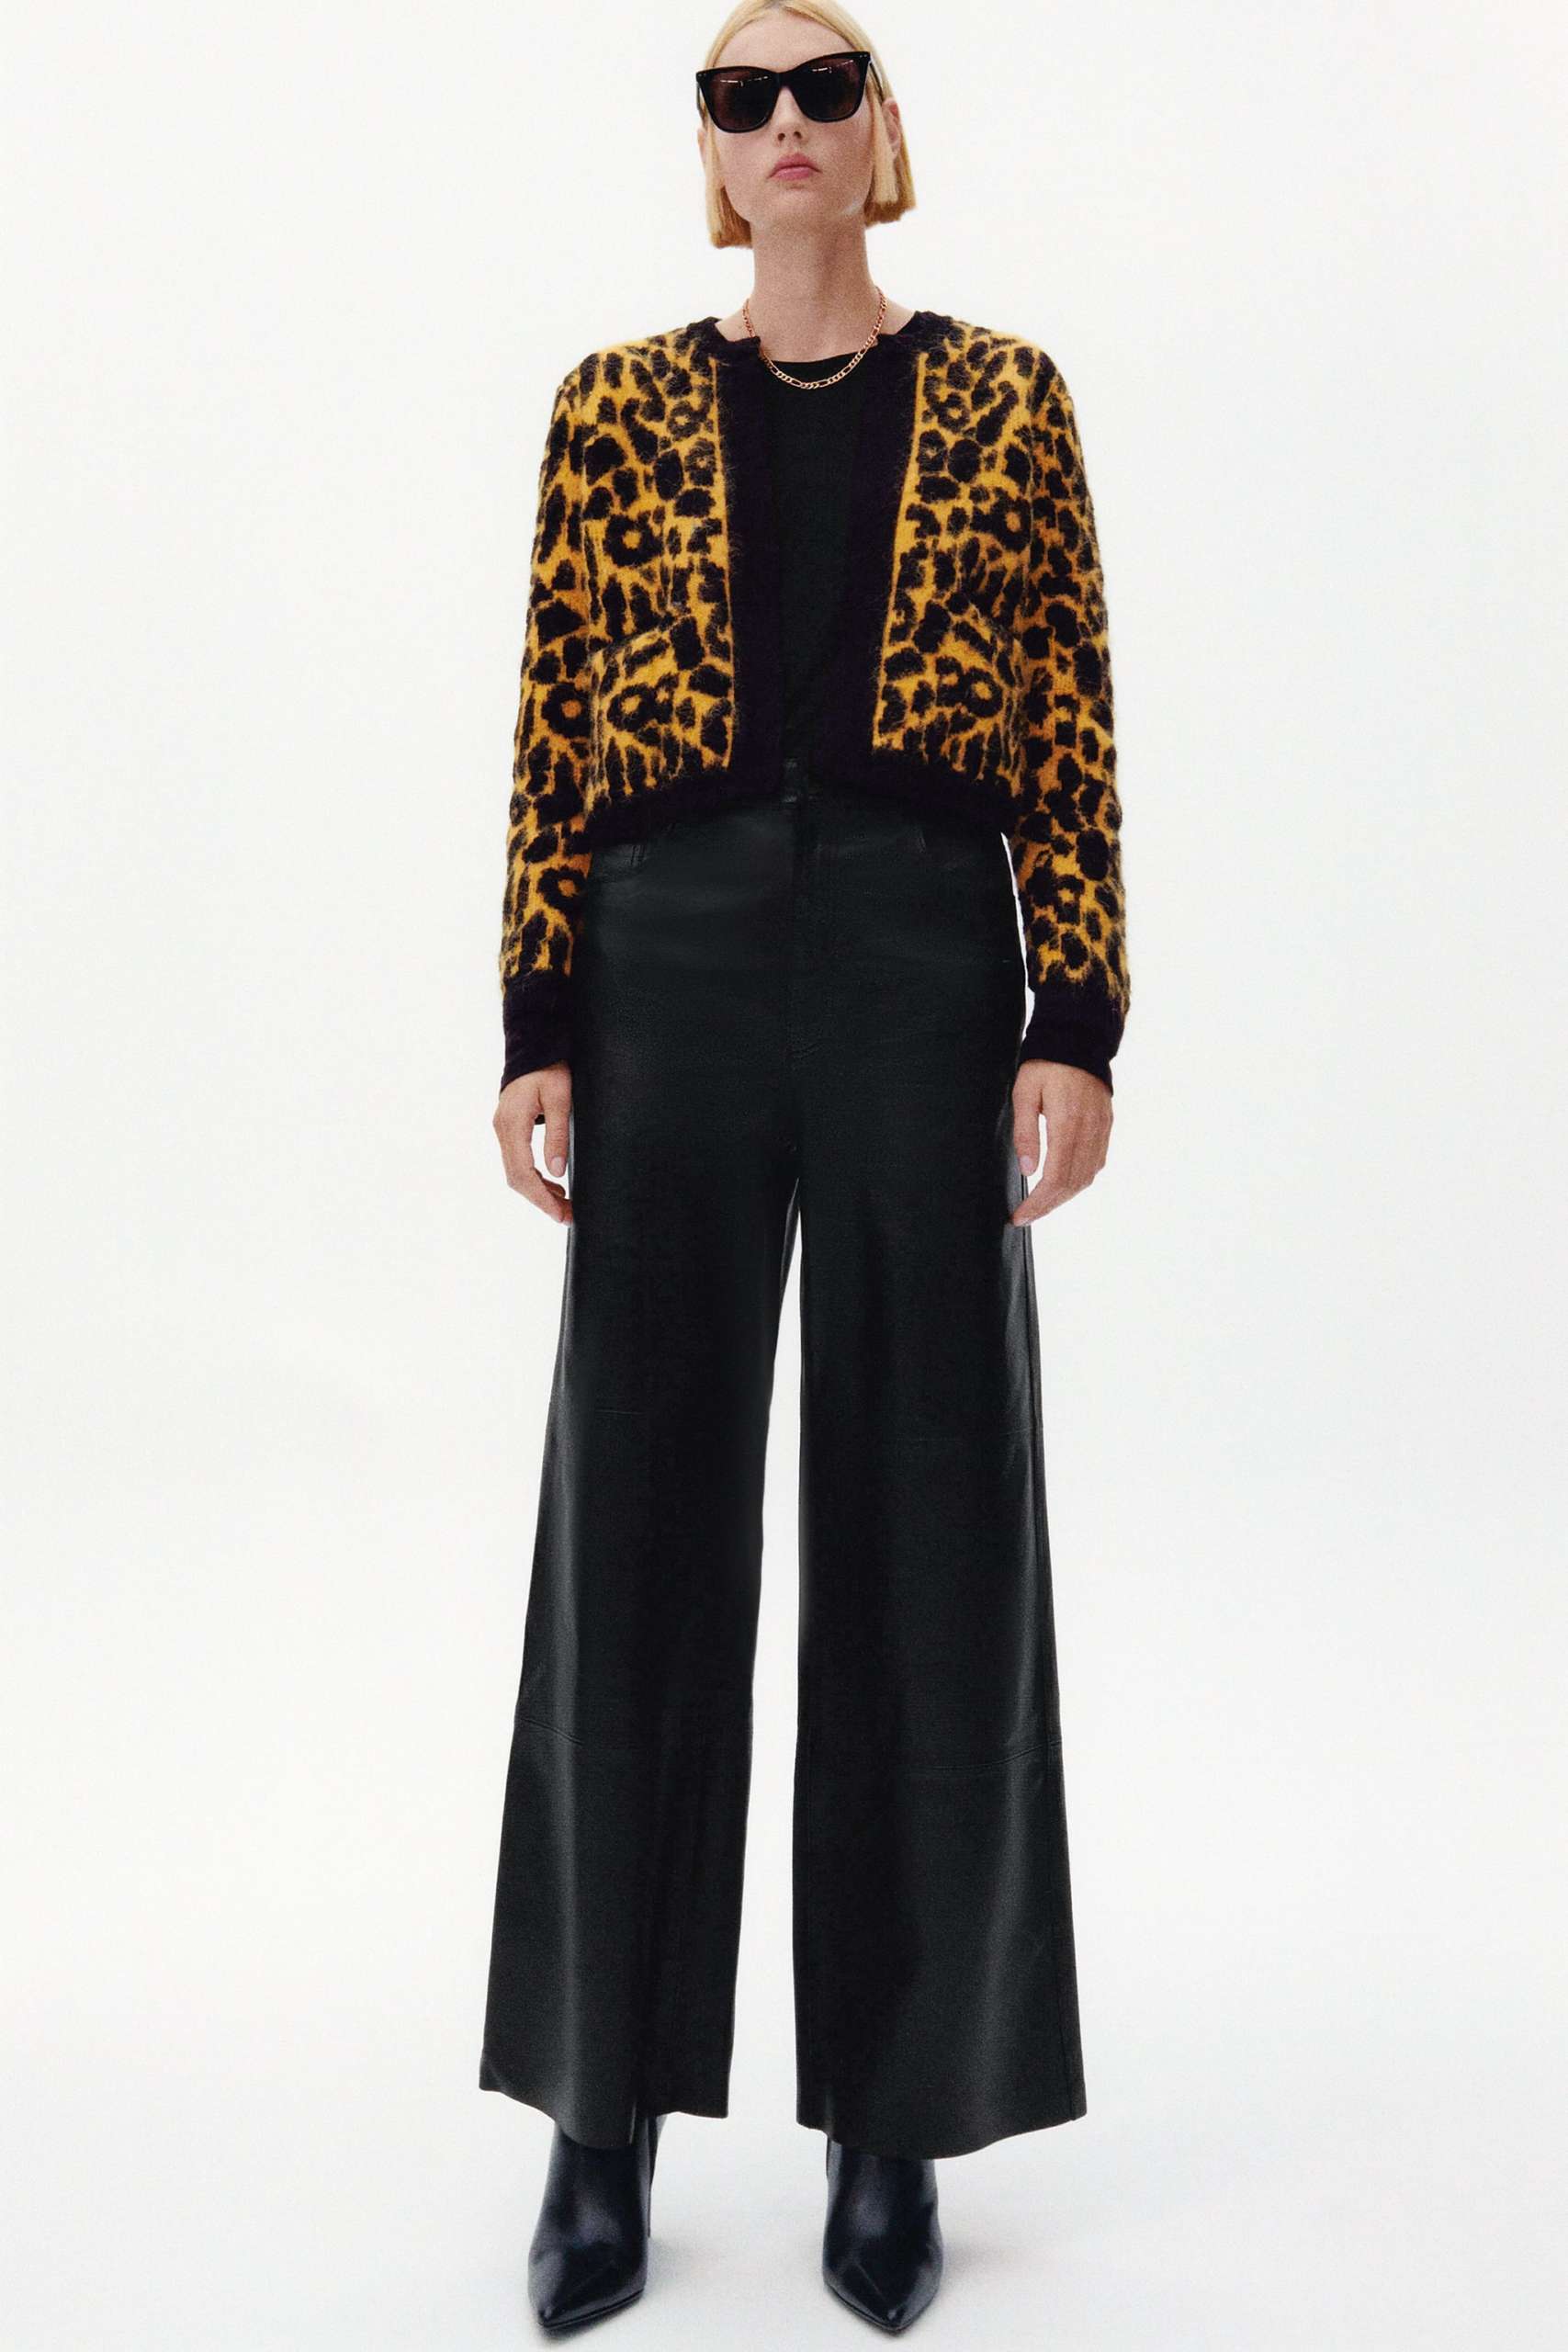 Zara Animal Print Knit Jacket